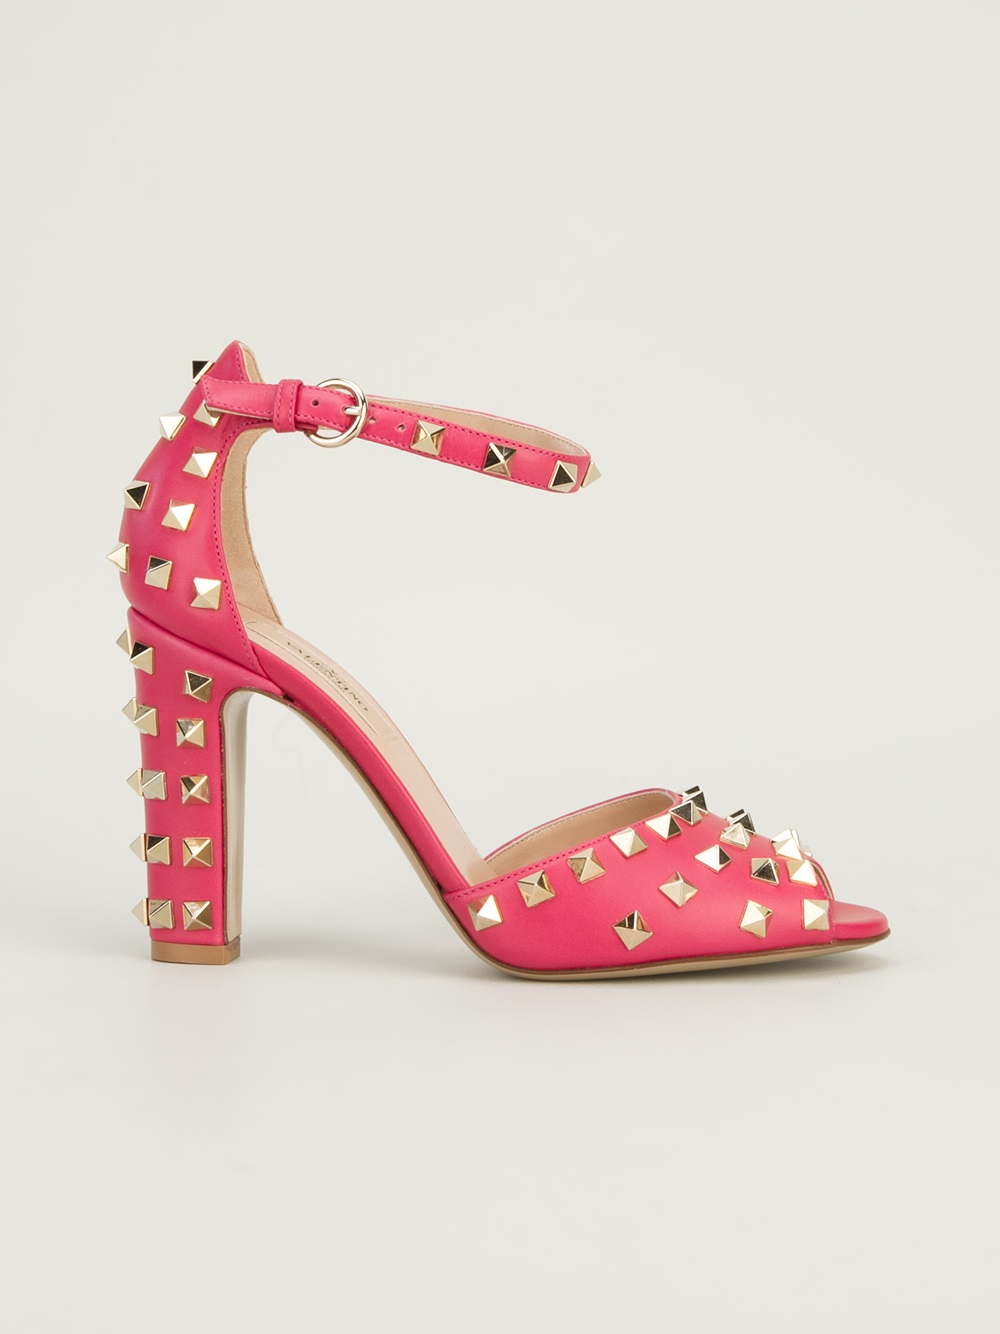 Lyst - Valentino Rockstud Sandal in Pink